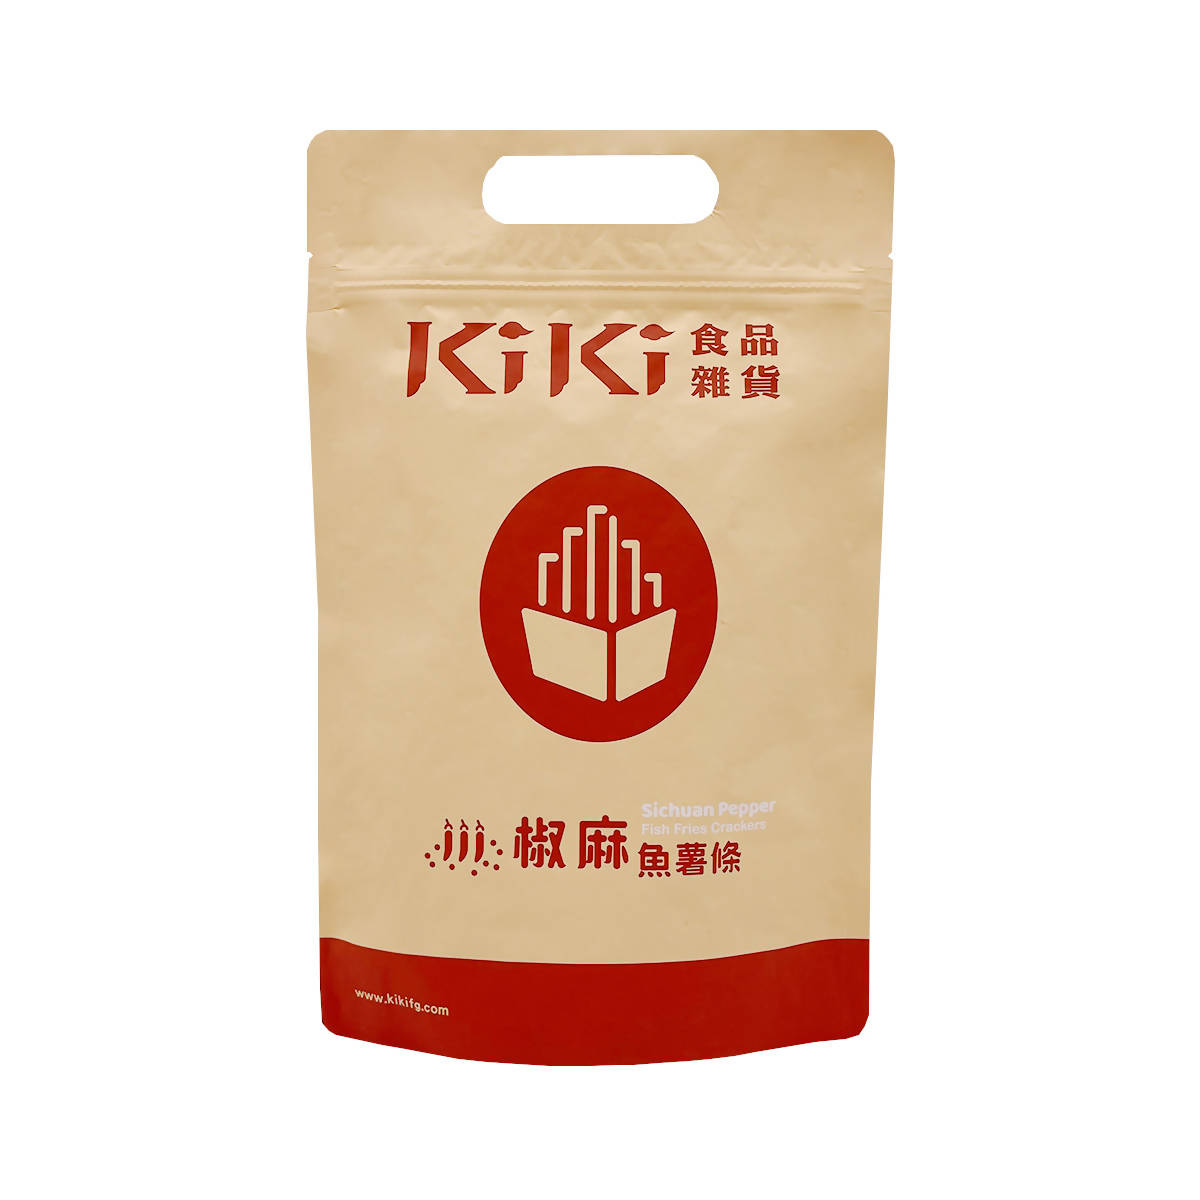 台灣直郵 【KIKI食品雜貨】 KIKI FINE GOODS 椒麻魚薯條 80g